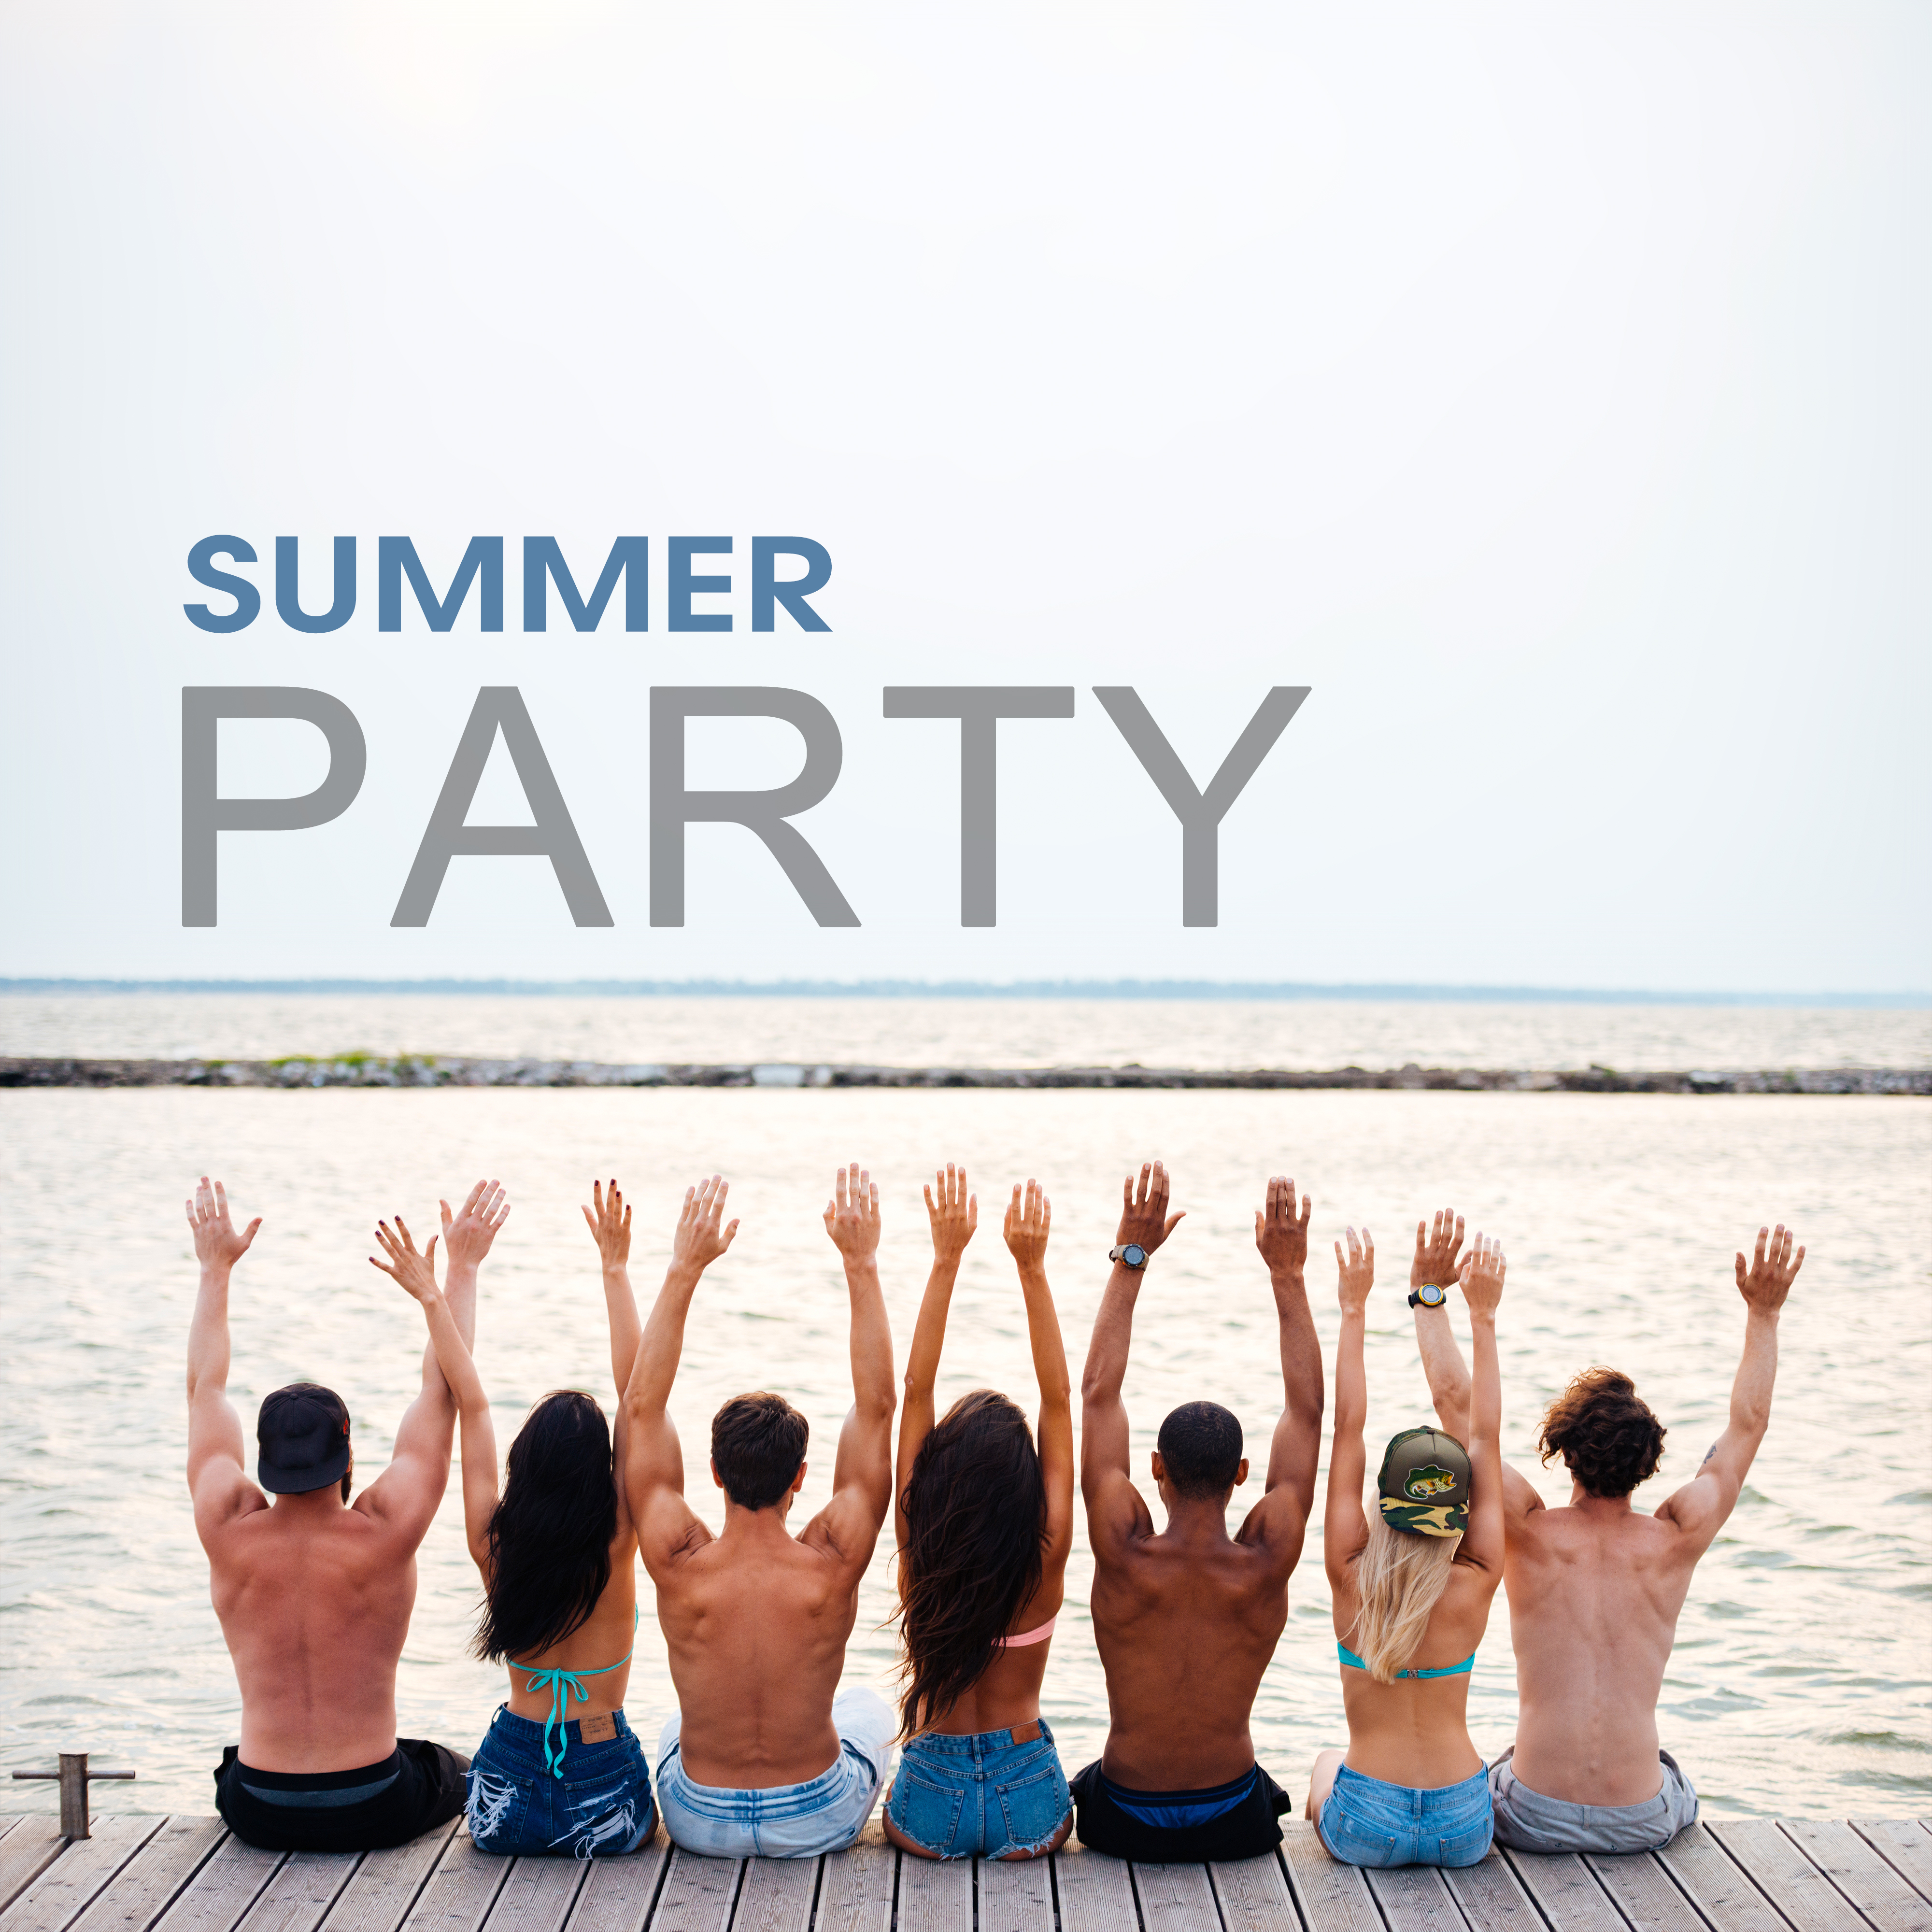 Summer Party – Disco Beach, Dancefloor, **** Vibrations, Holiday Chill, Summertime 2017